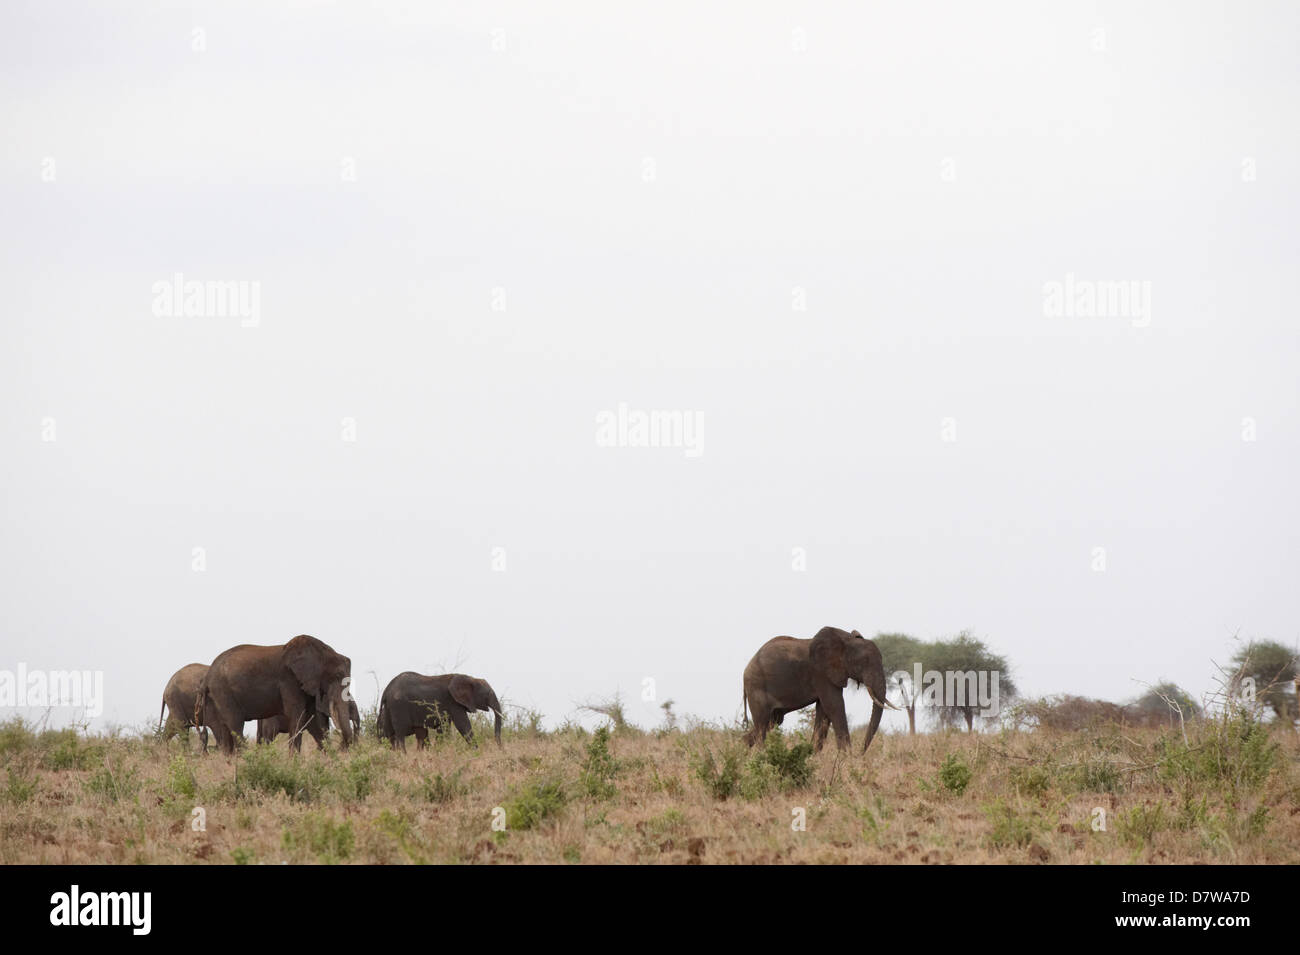 Herd of elephants, Meru National Park, Kenya Stock Photo